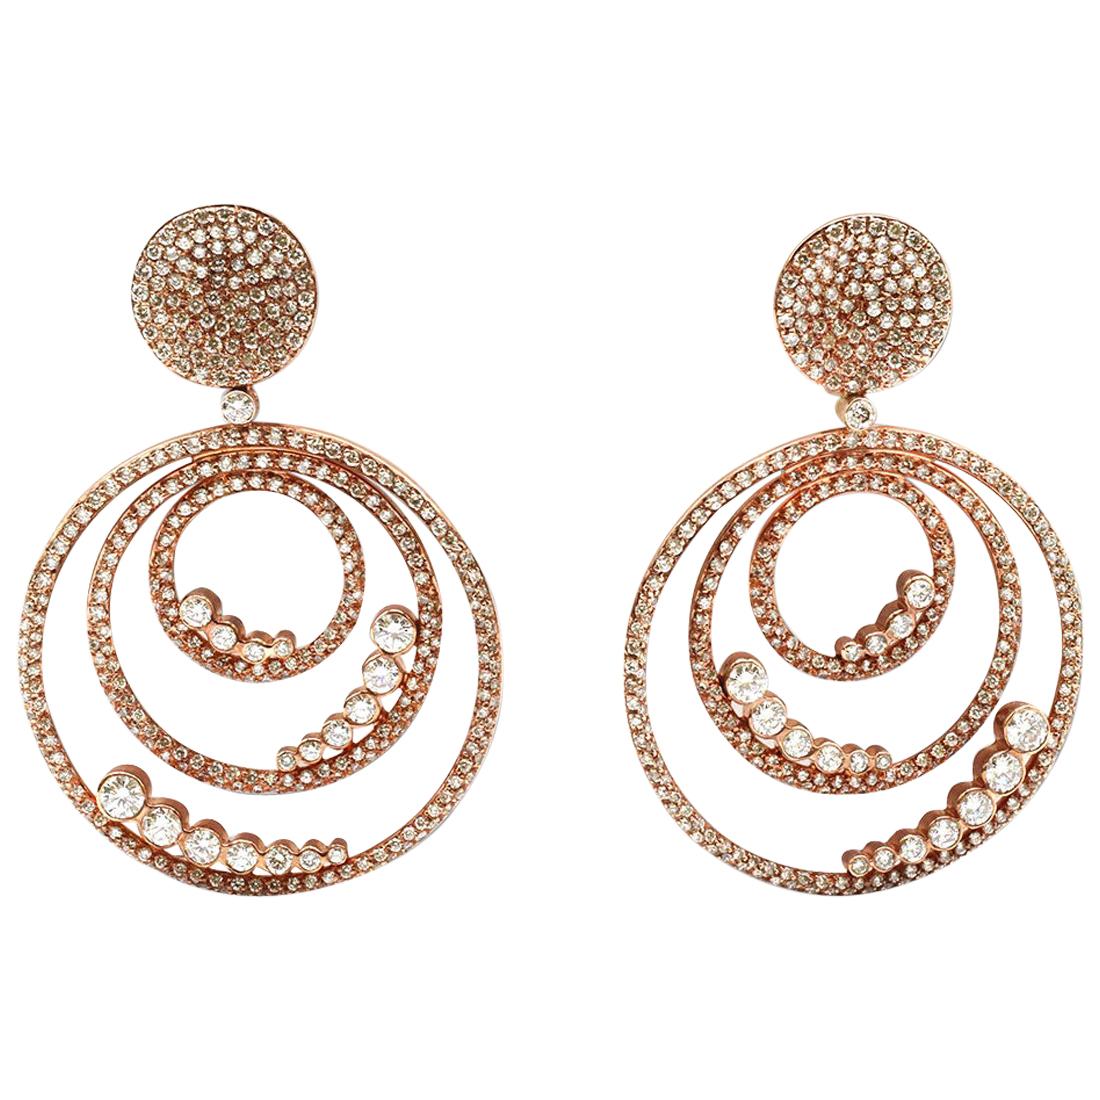 Rose Gold and Diamond Chandelier Earrings